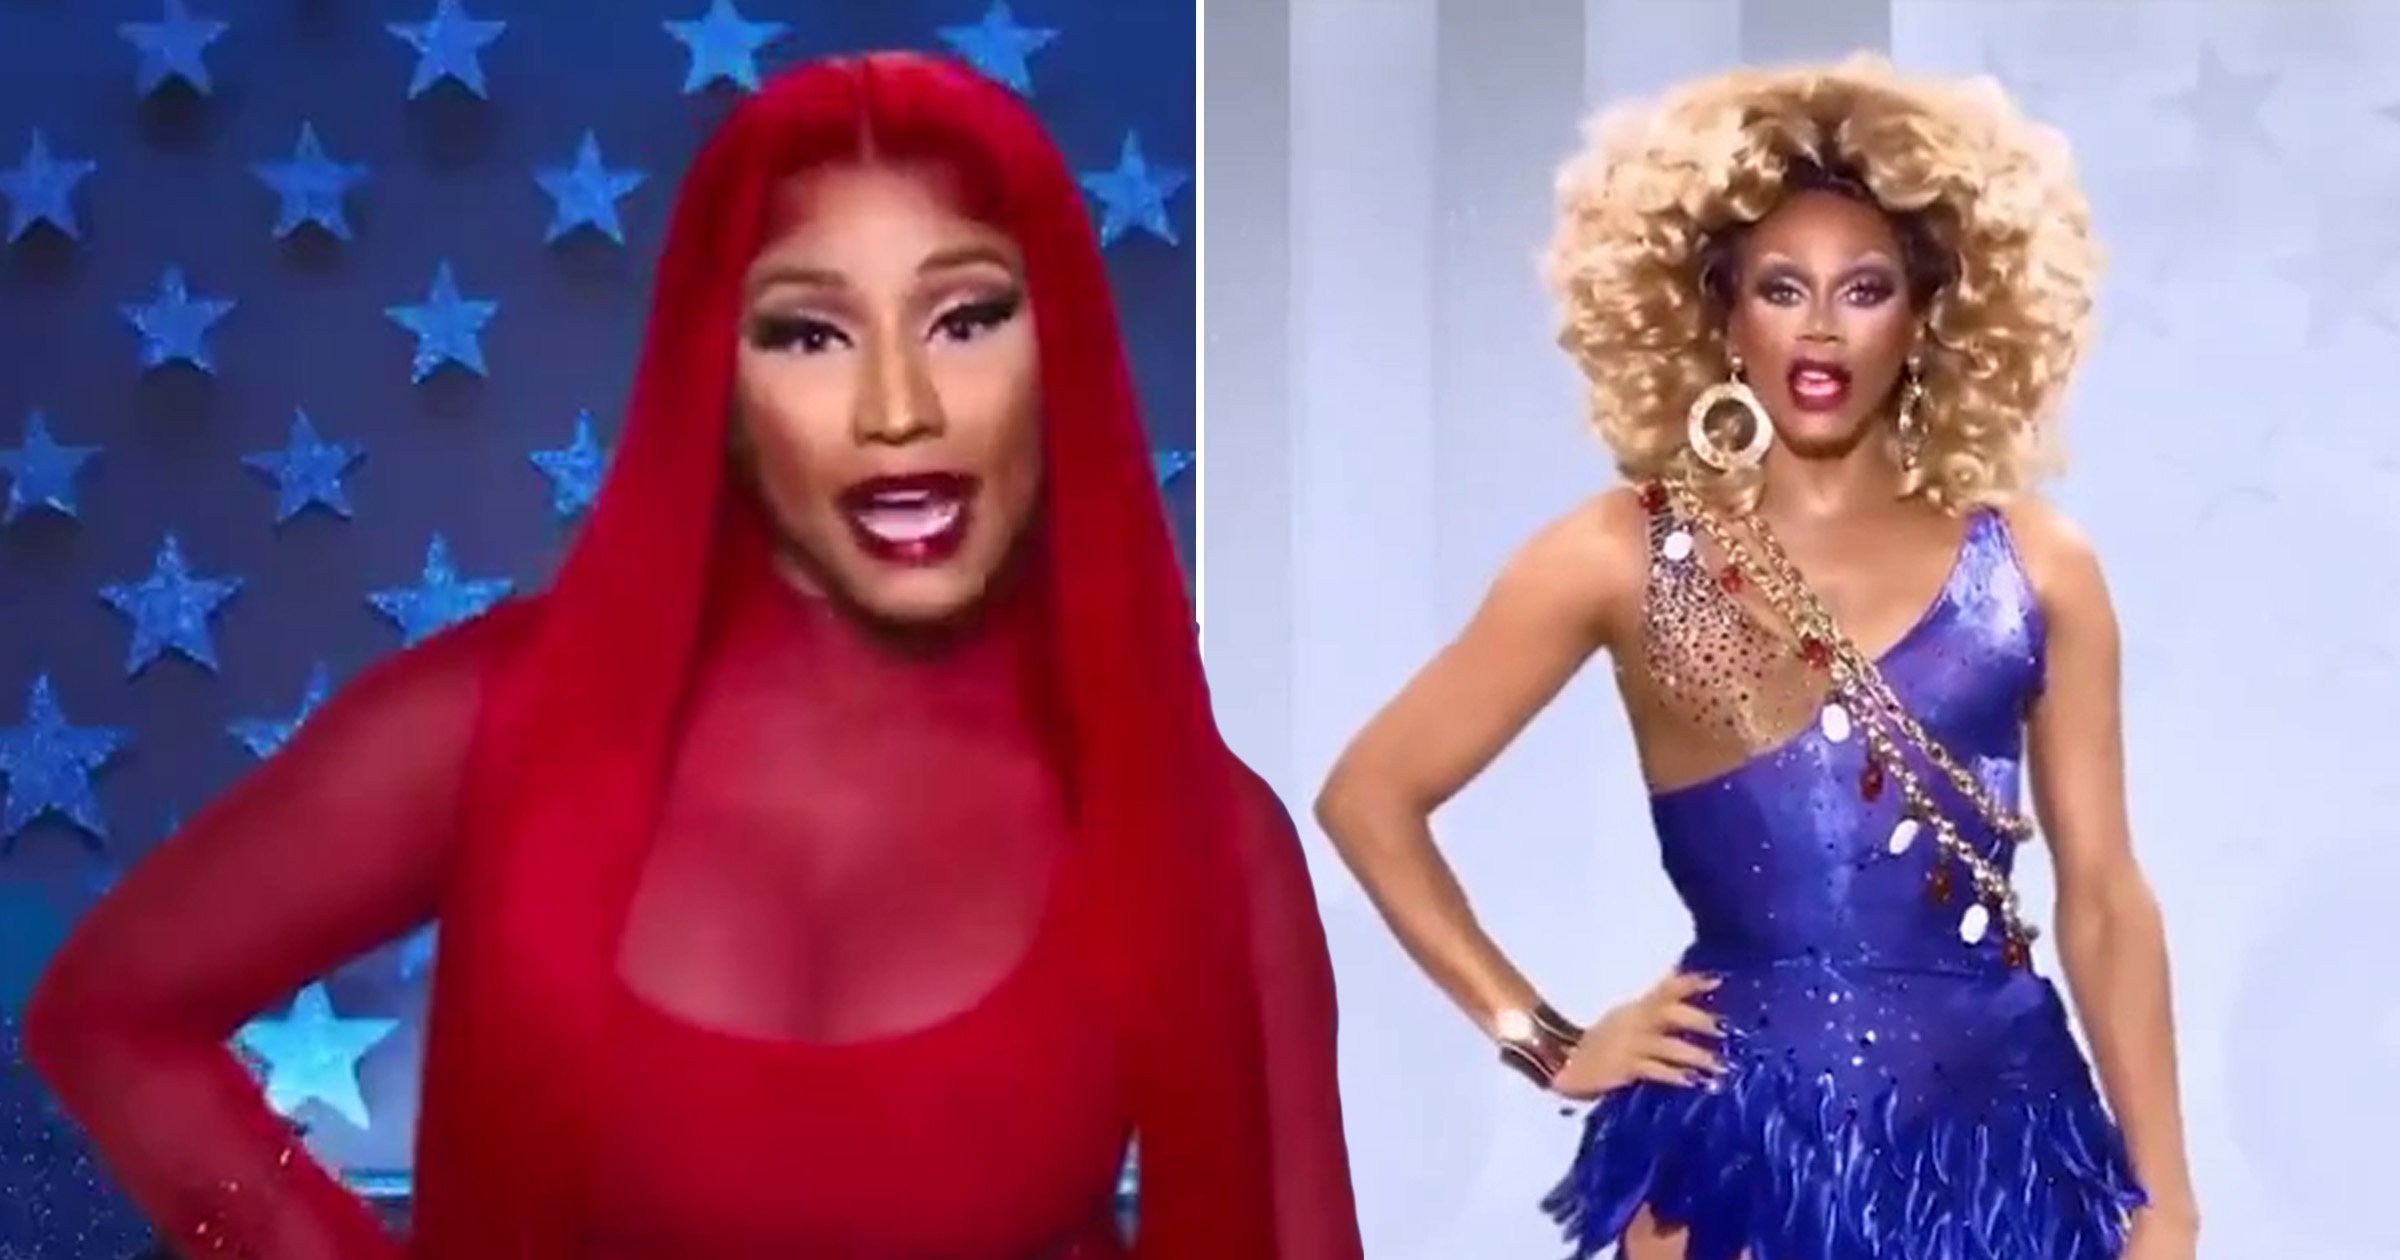 7. Nicki Minaj's blue dress and real hair look recreated by drag queens - wide 9